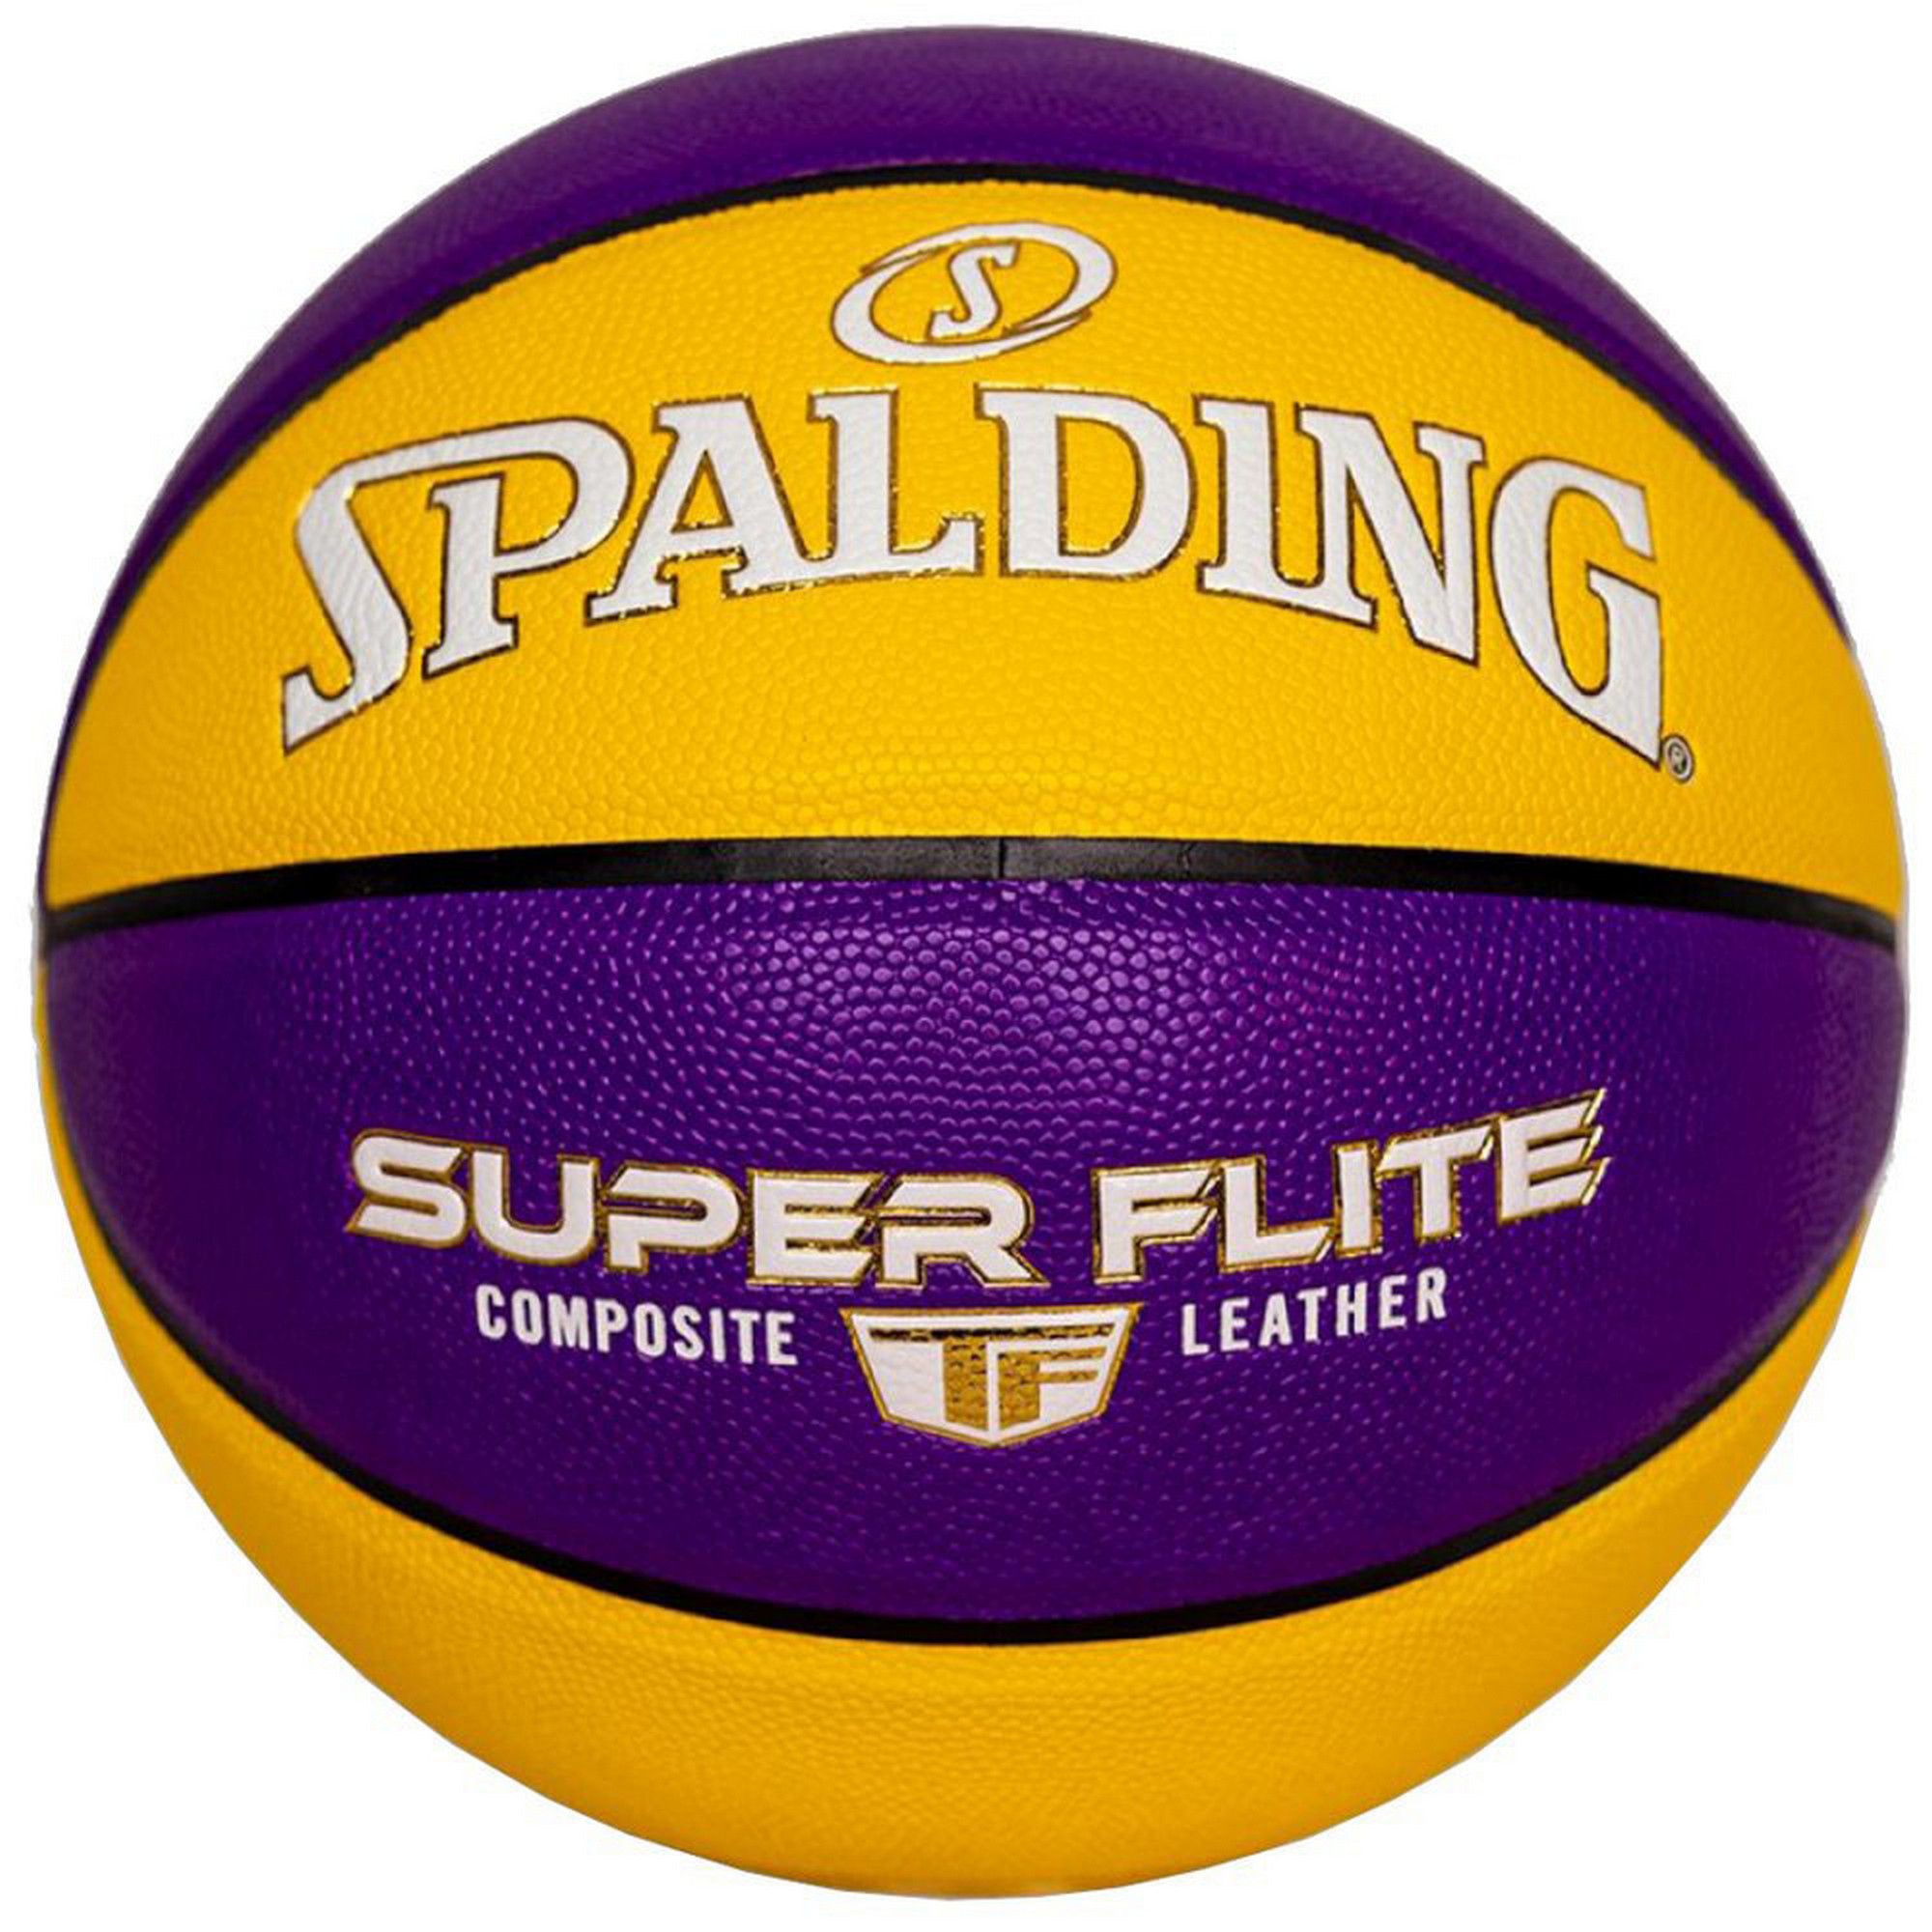   Spalding Super Flite 76-930Z .7